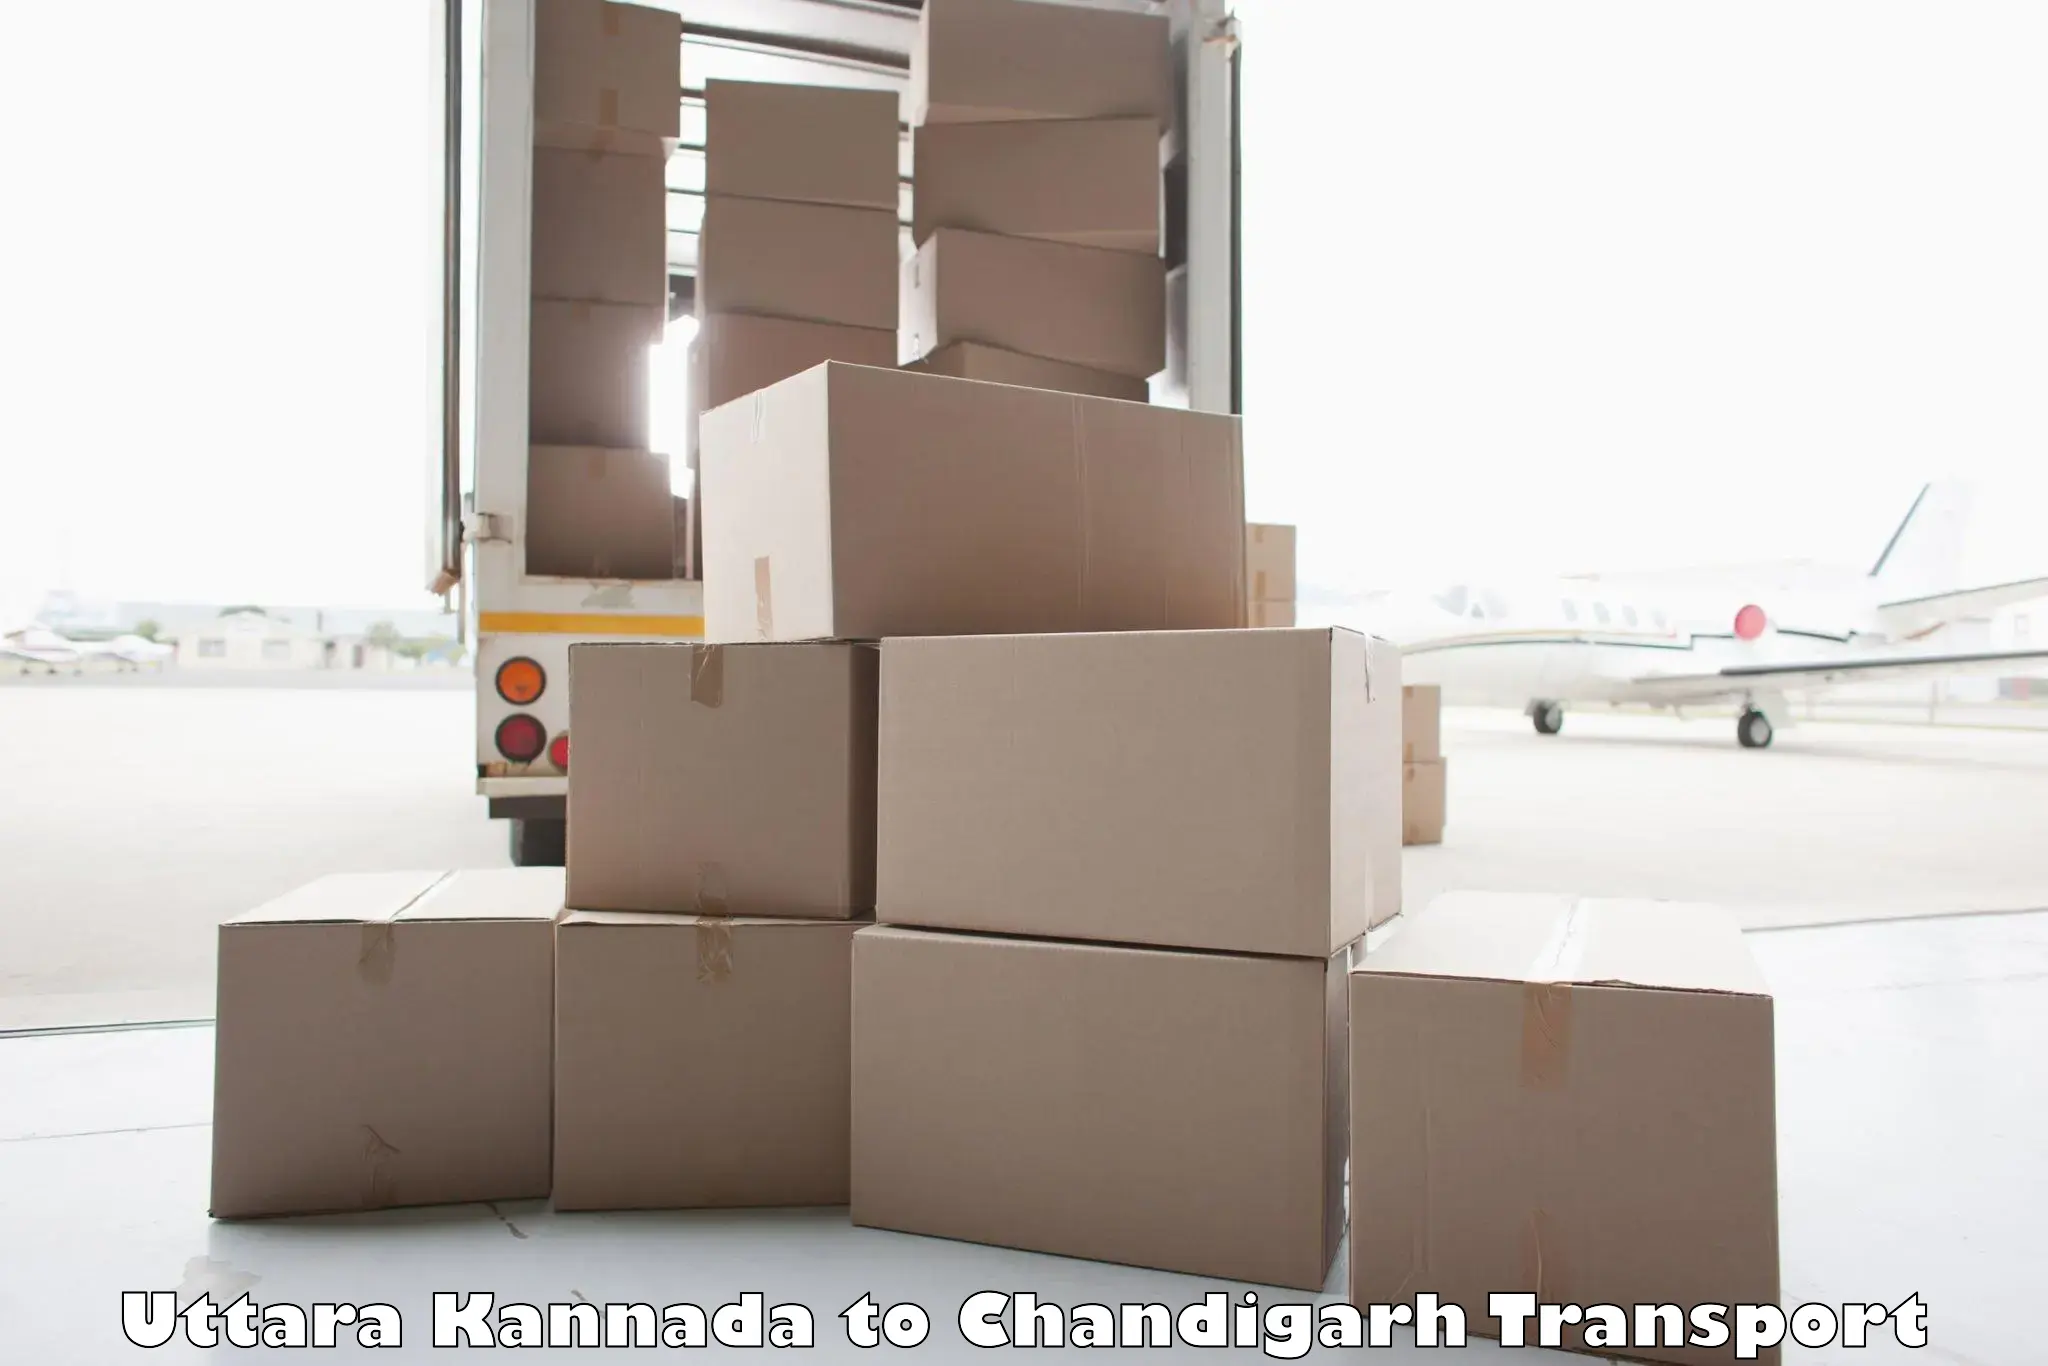 Transport bike from one state to another Uttara Kannada to Chandigarh